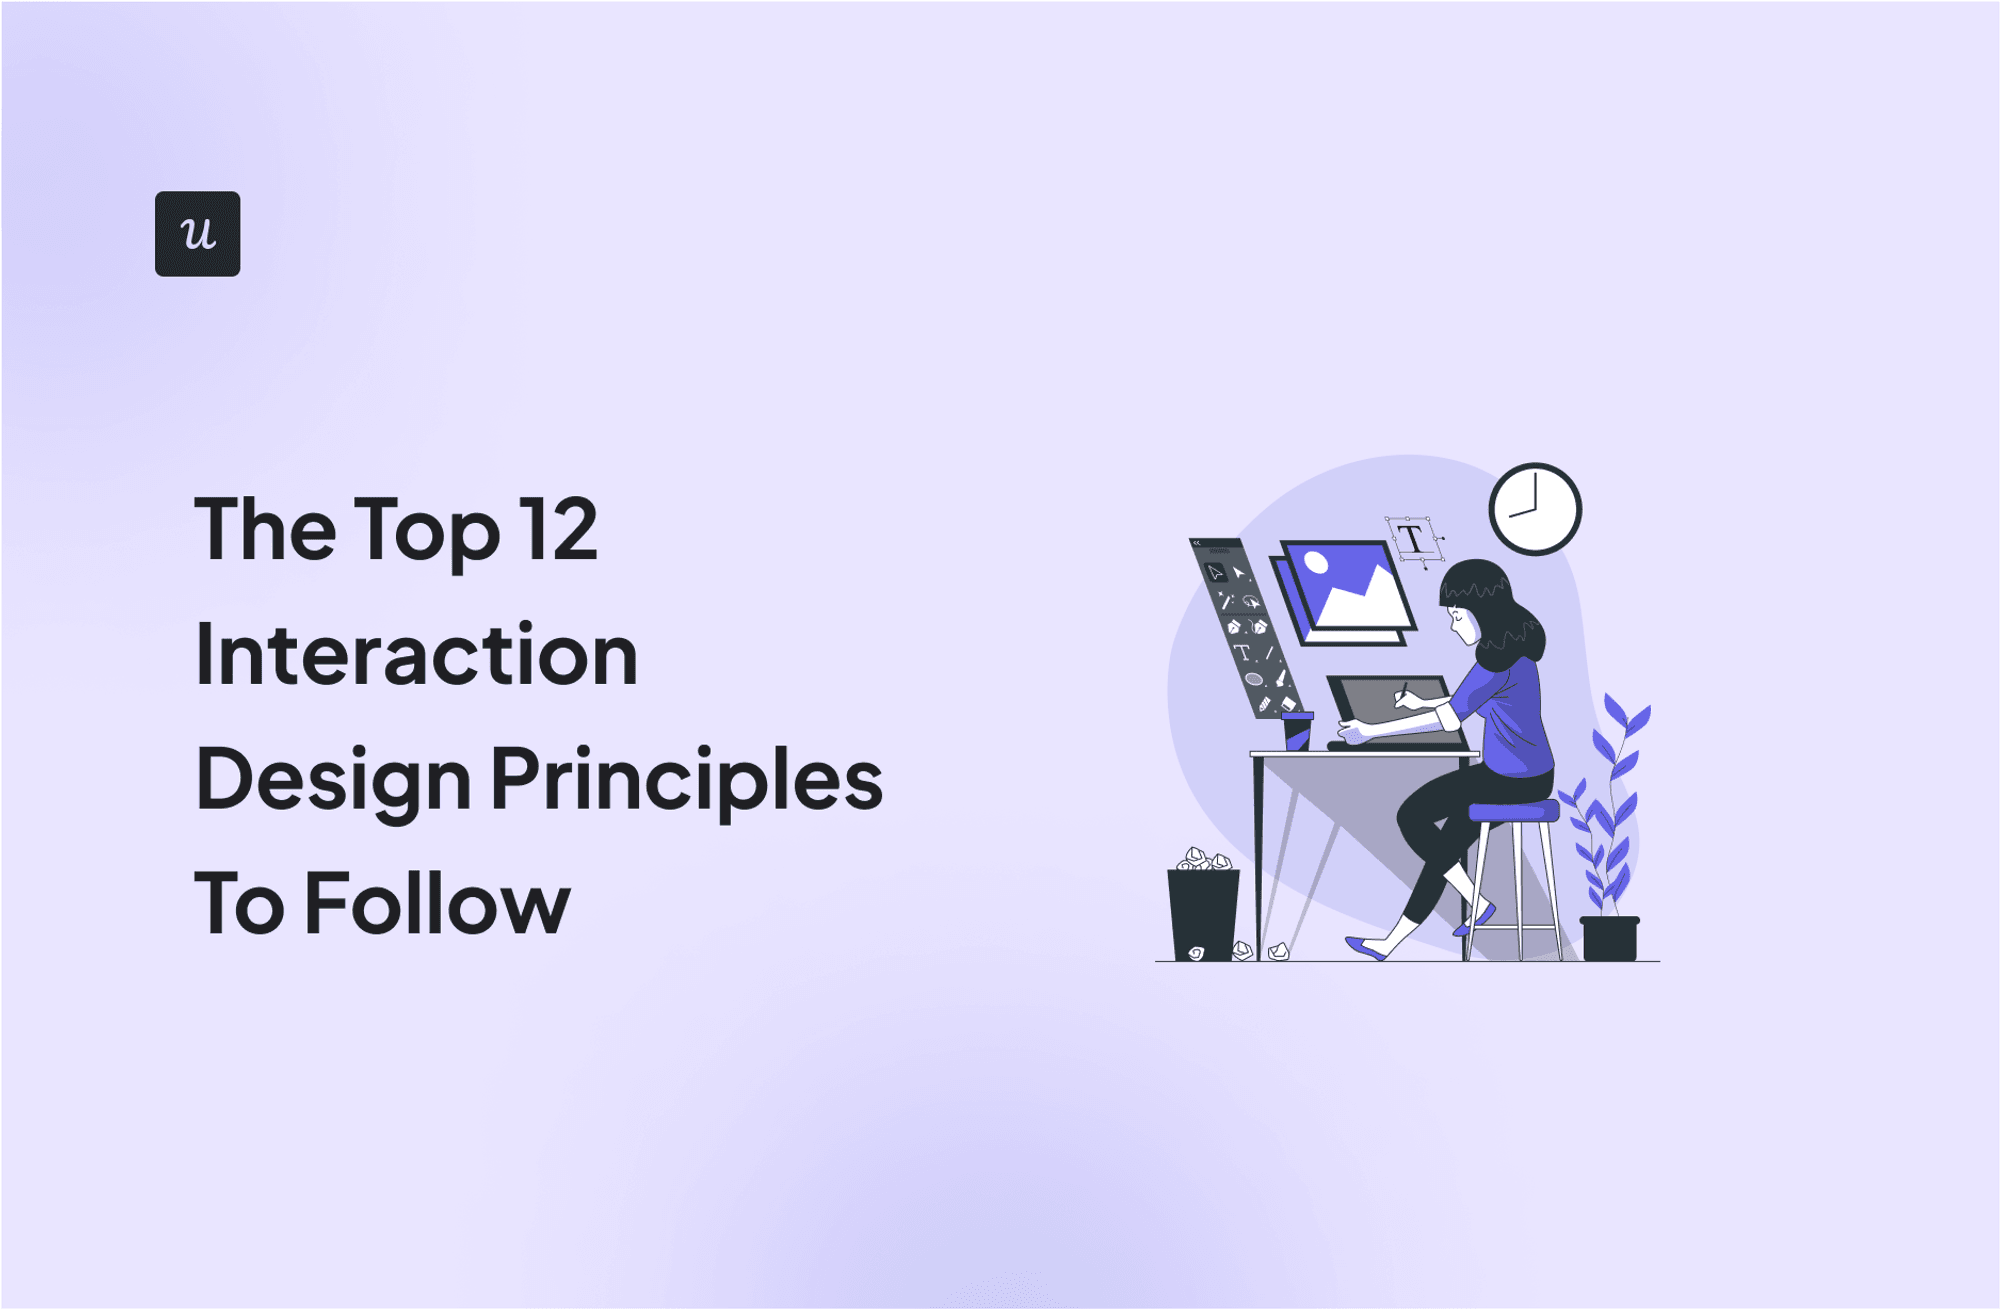 The Top 12 Interaction Design Principles To Follow cover